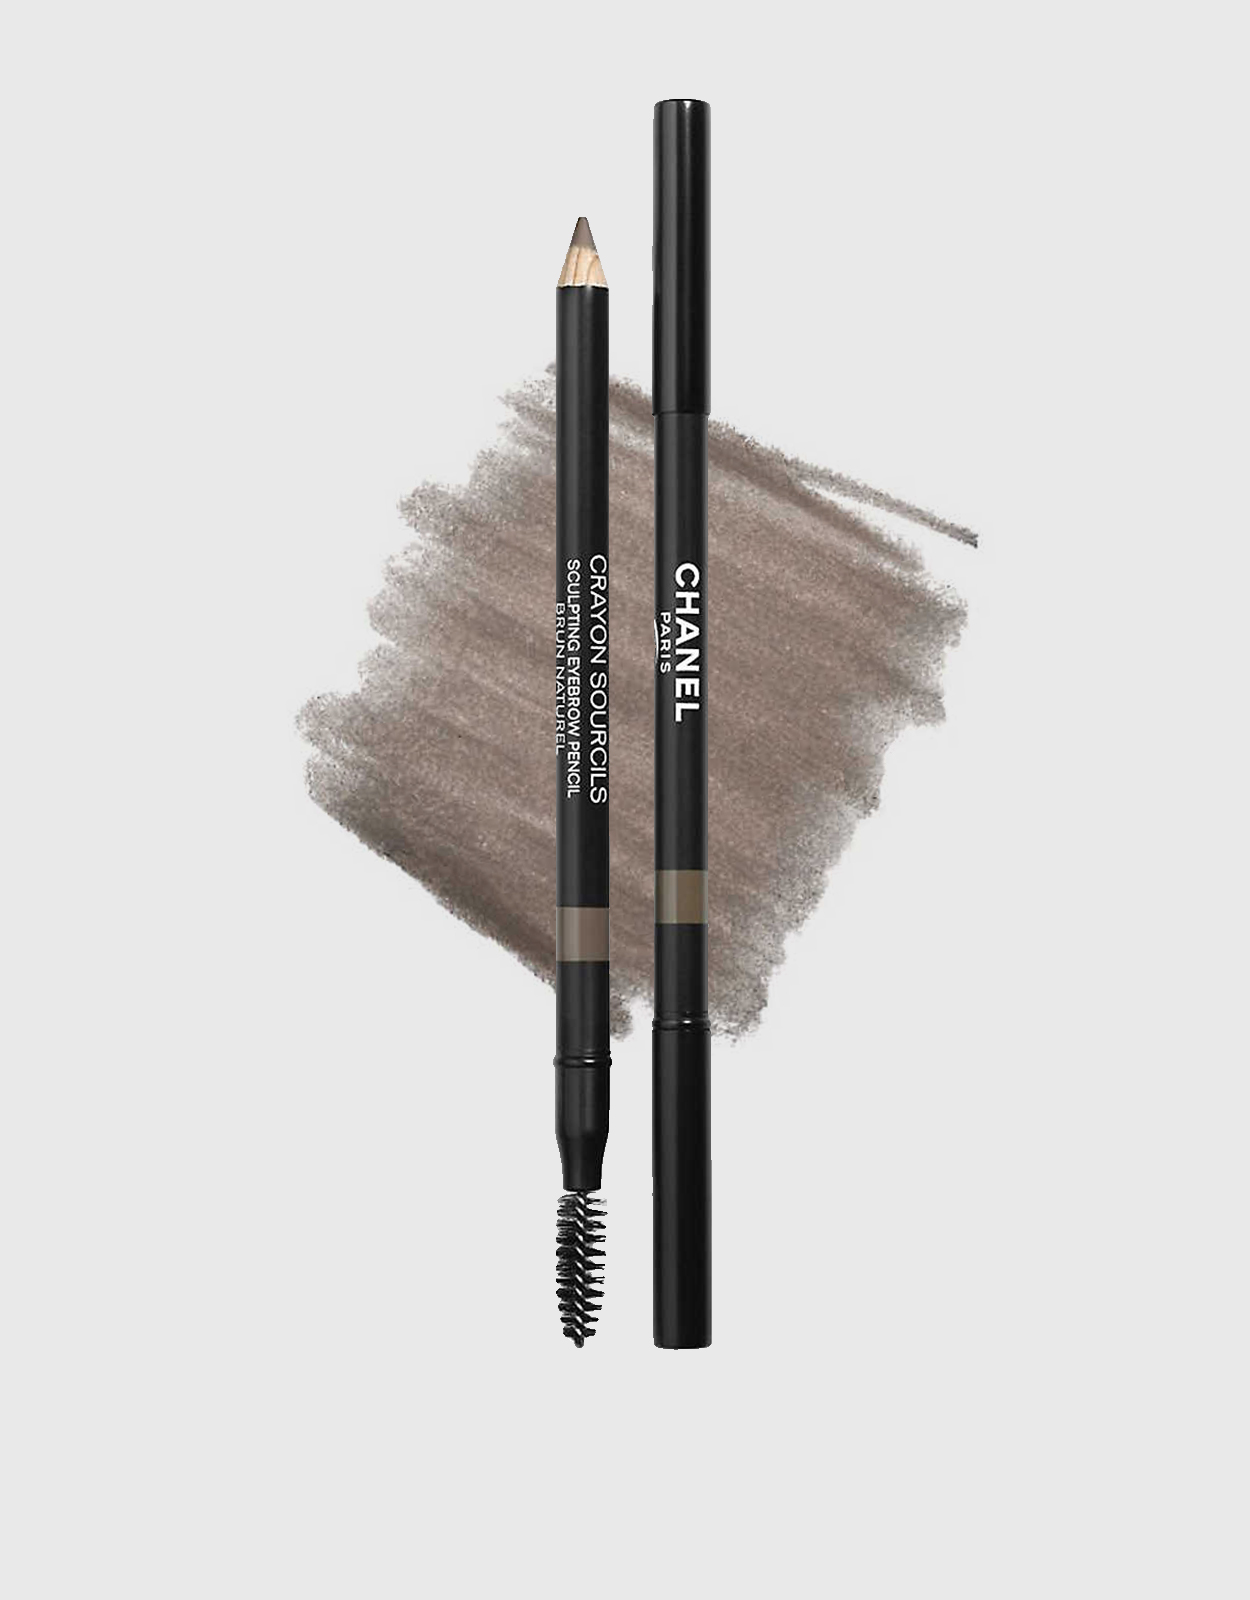 Chanel Beauty Crayon Sourcils Sculpting Eyebrow Pencil-30 Brun Natural  (Makeup,Eye,Eyebrows)